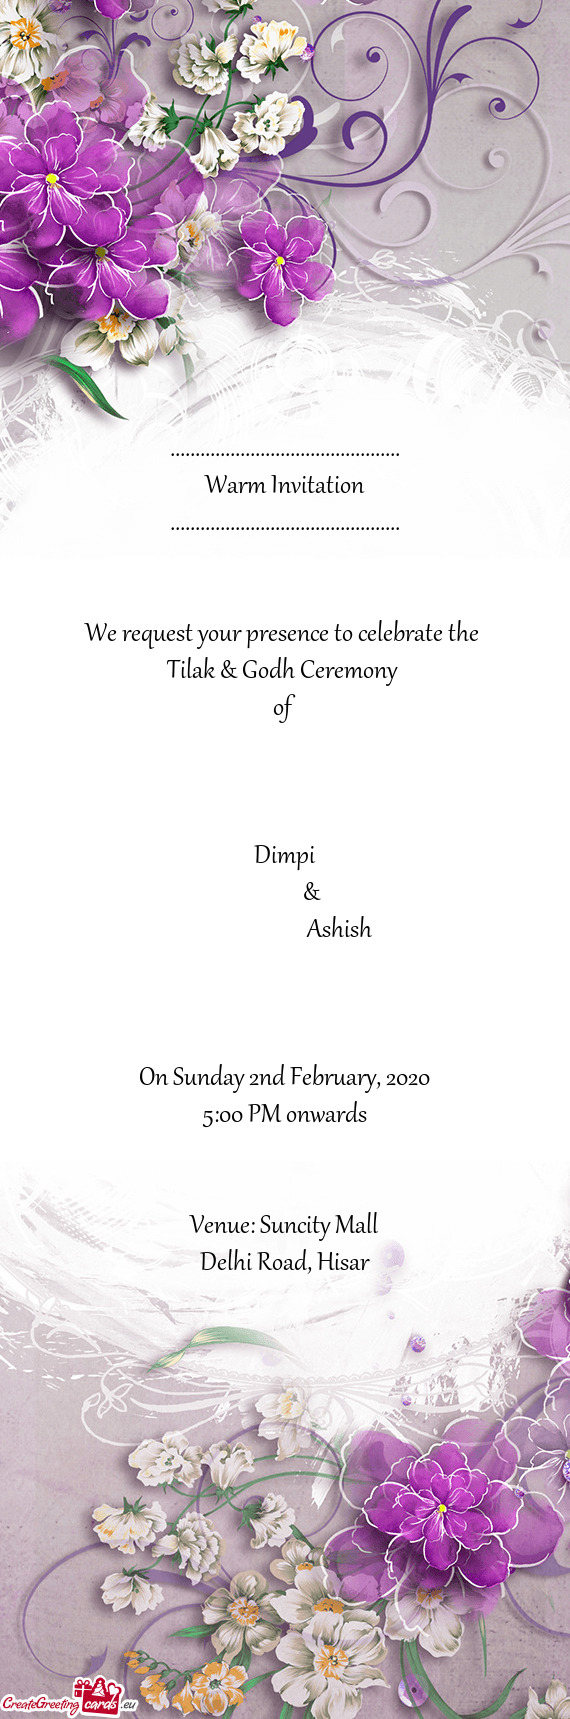 Tilak & Godh Ceremony